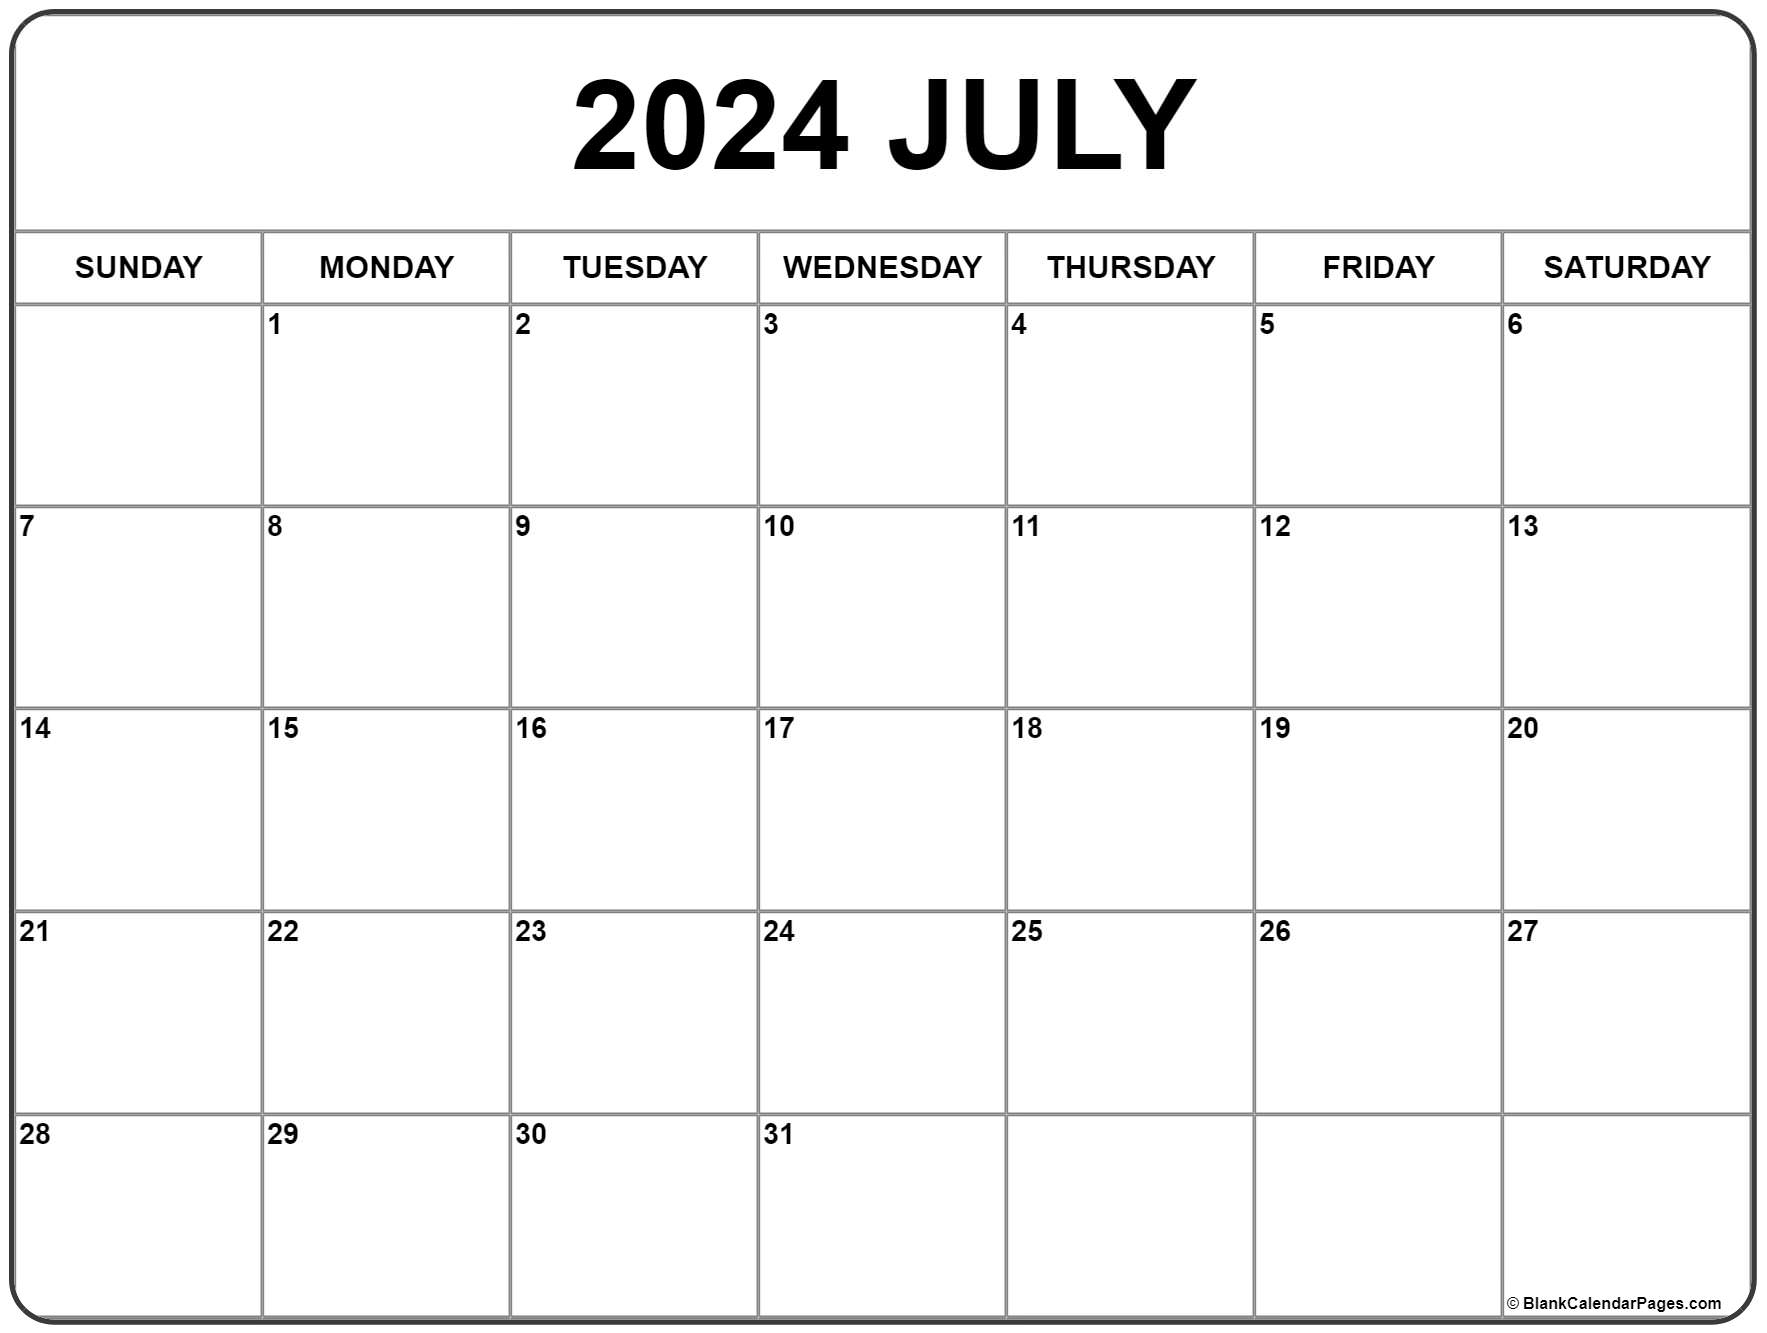 Summer 2021 Calendar July 2021 calendar | free printable monthly calendars